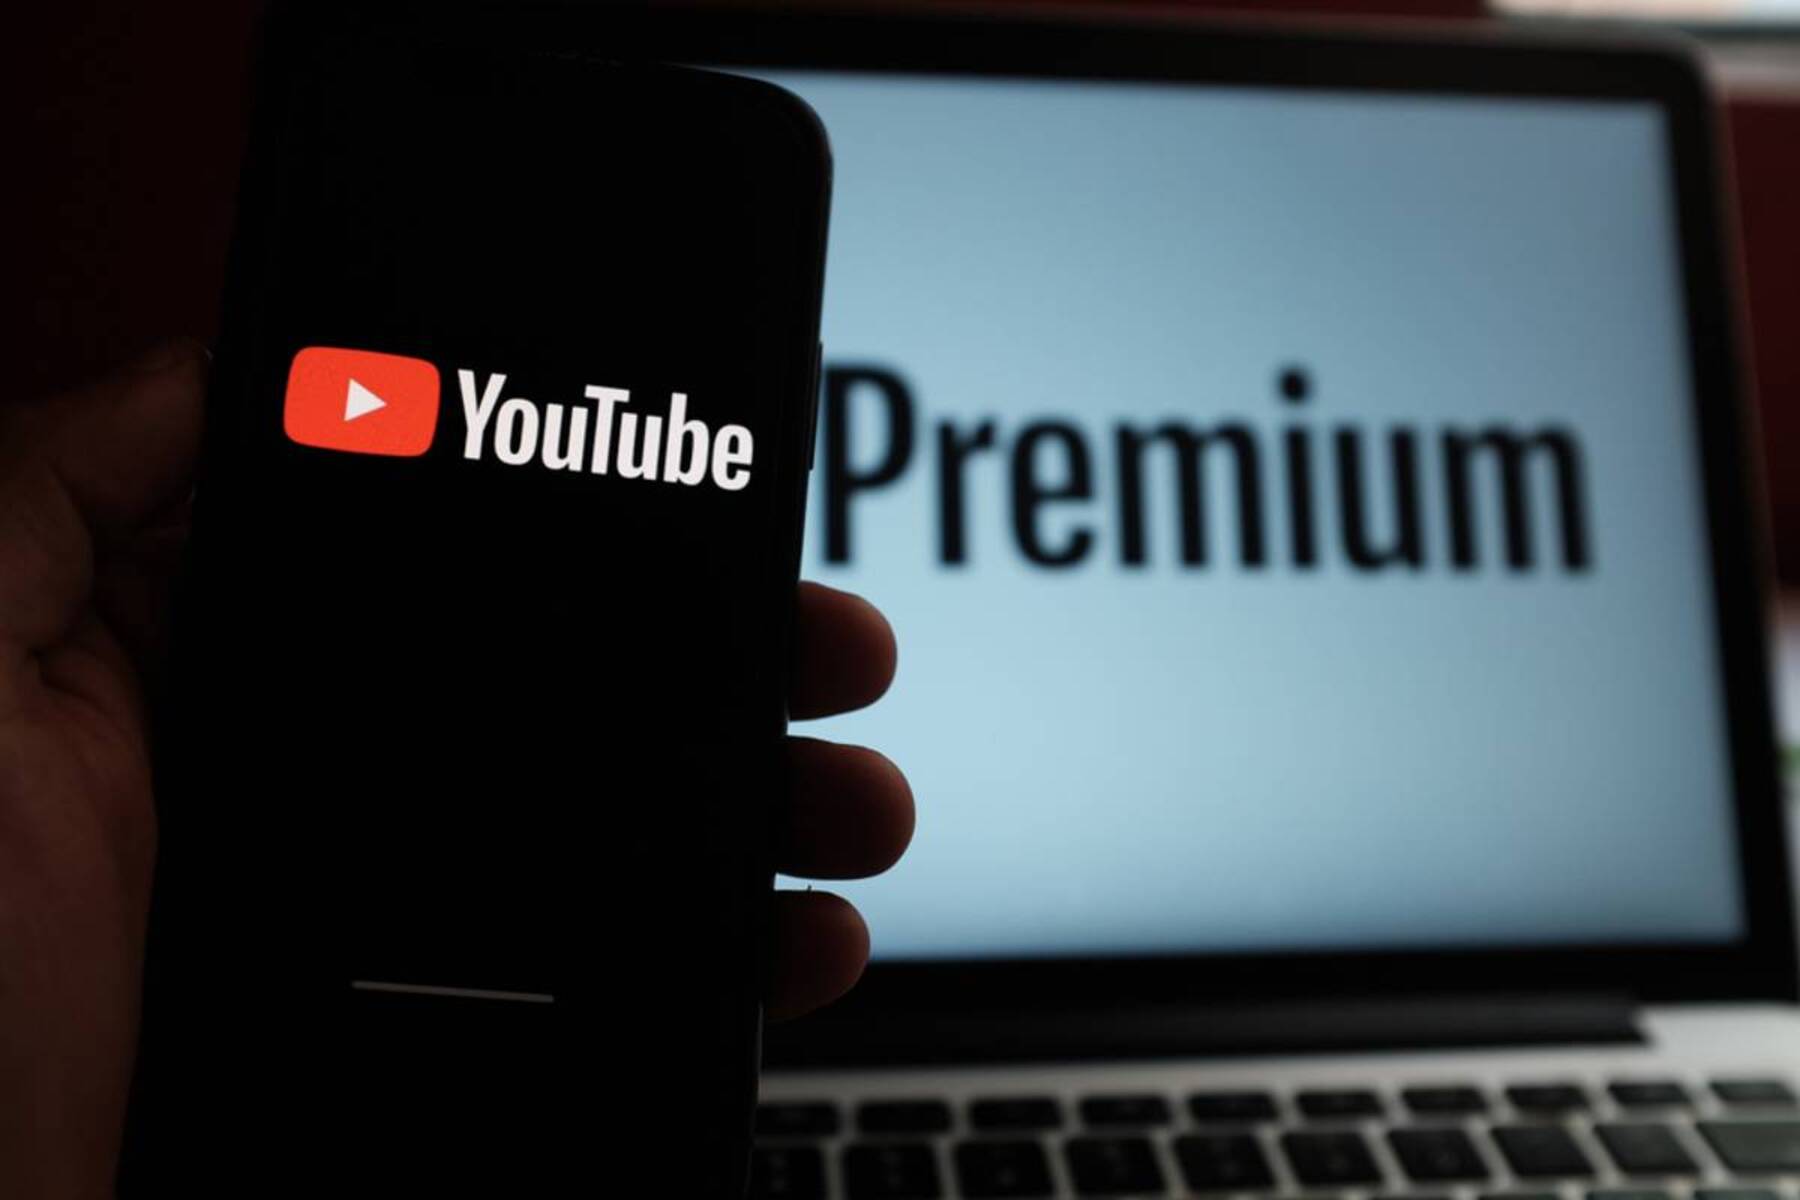 What Is YouTube Premium?